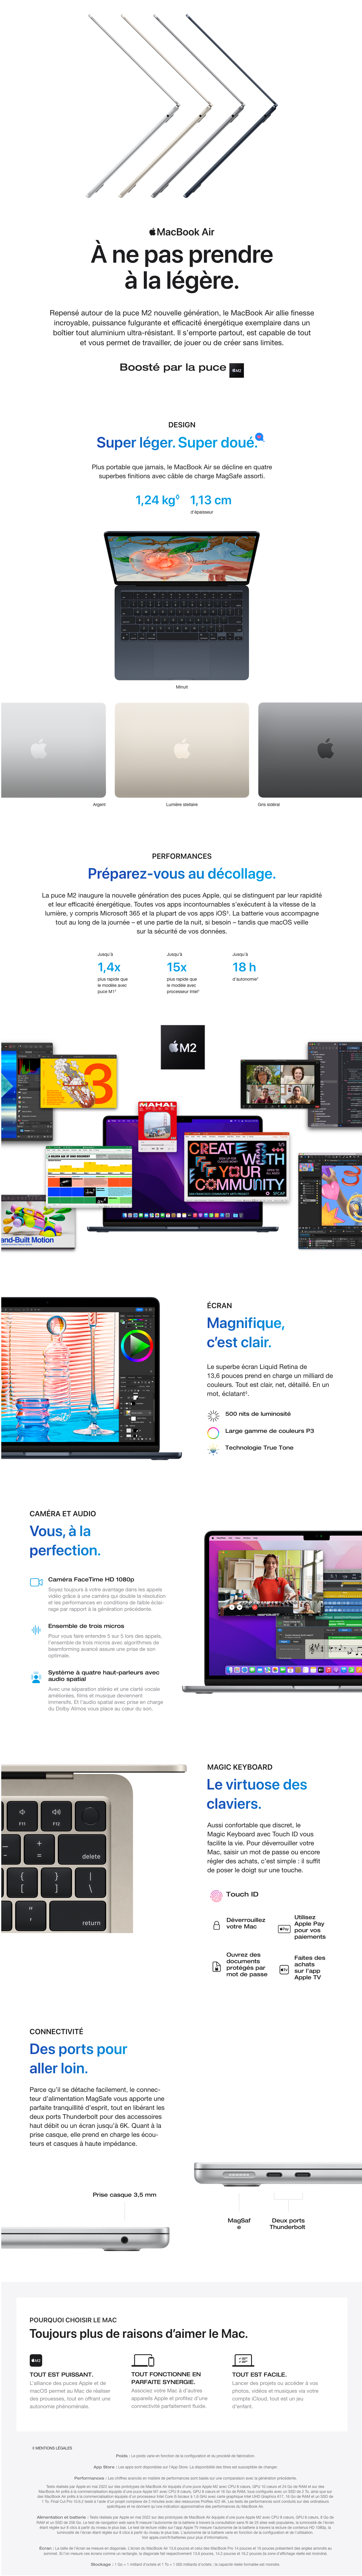 Bollestore Plus-APPLE STORE Abidjan - Compatibilité avec l'écran Thunderbolt  Display. Incluant les générations actuelles de MacBook Air, MacBook Pro,  Mac mini, Mac Pro et iMac, les Mac disposant de Thunderbolt sont entièrement